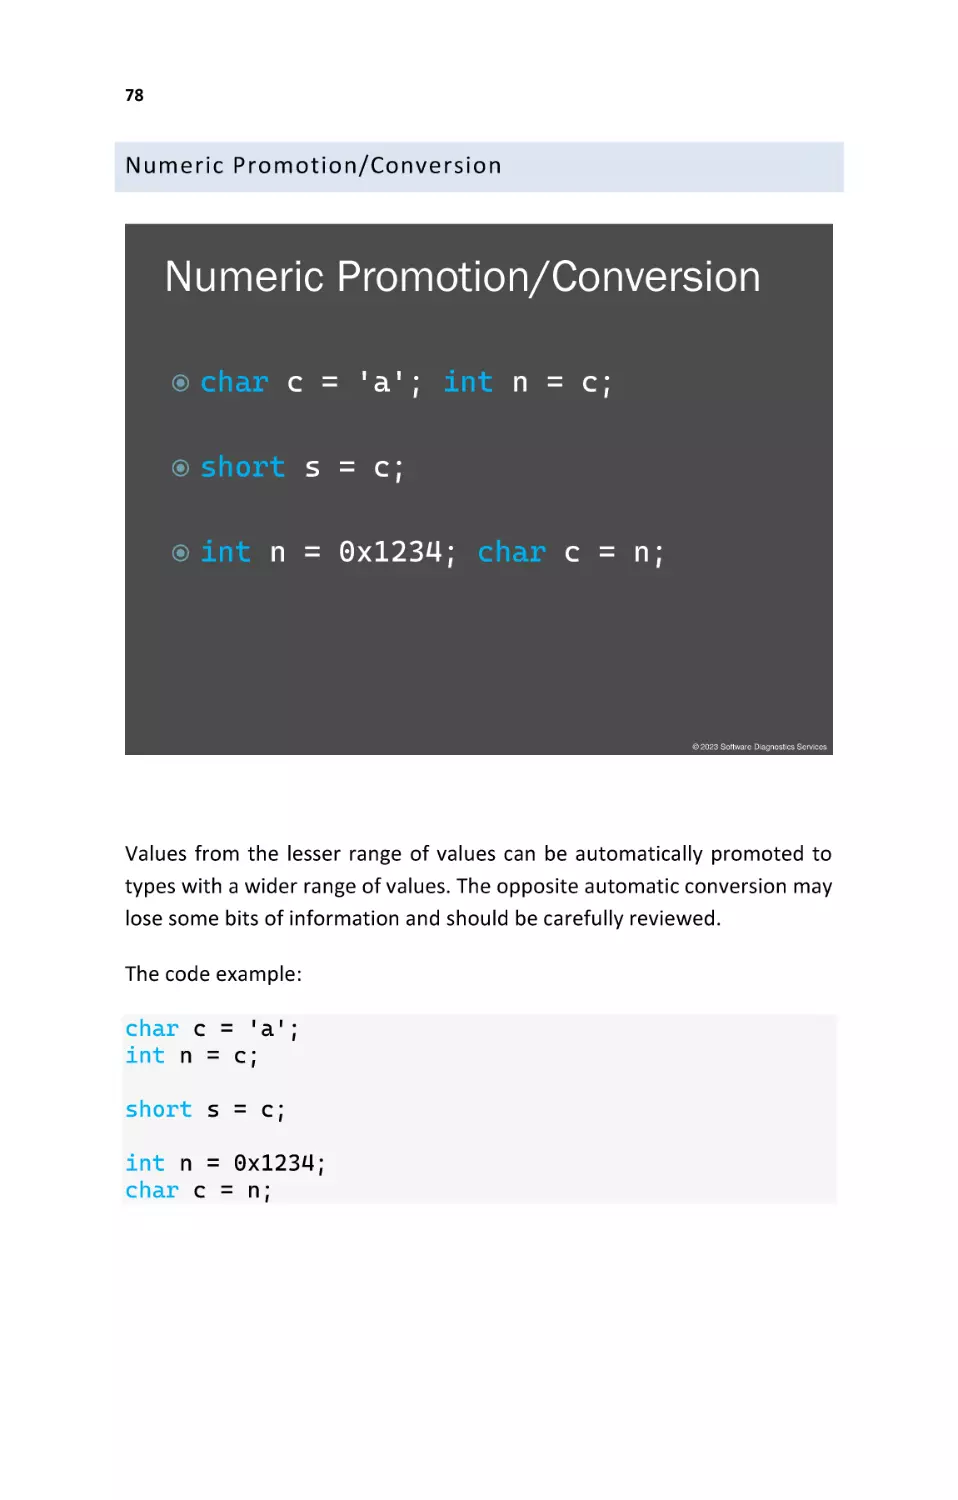 Numeric Promotion/Conversion